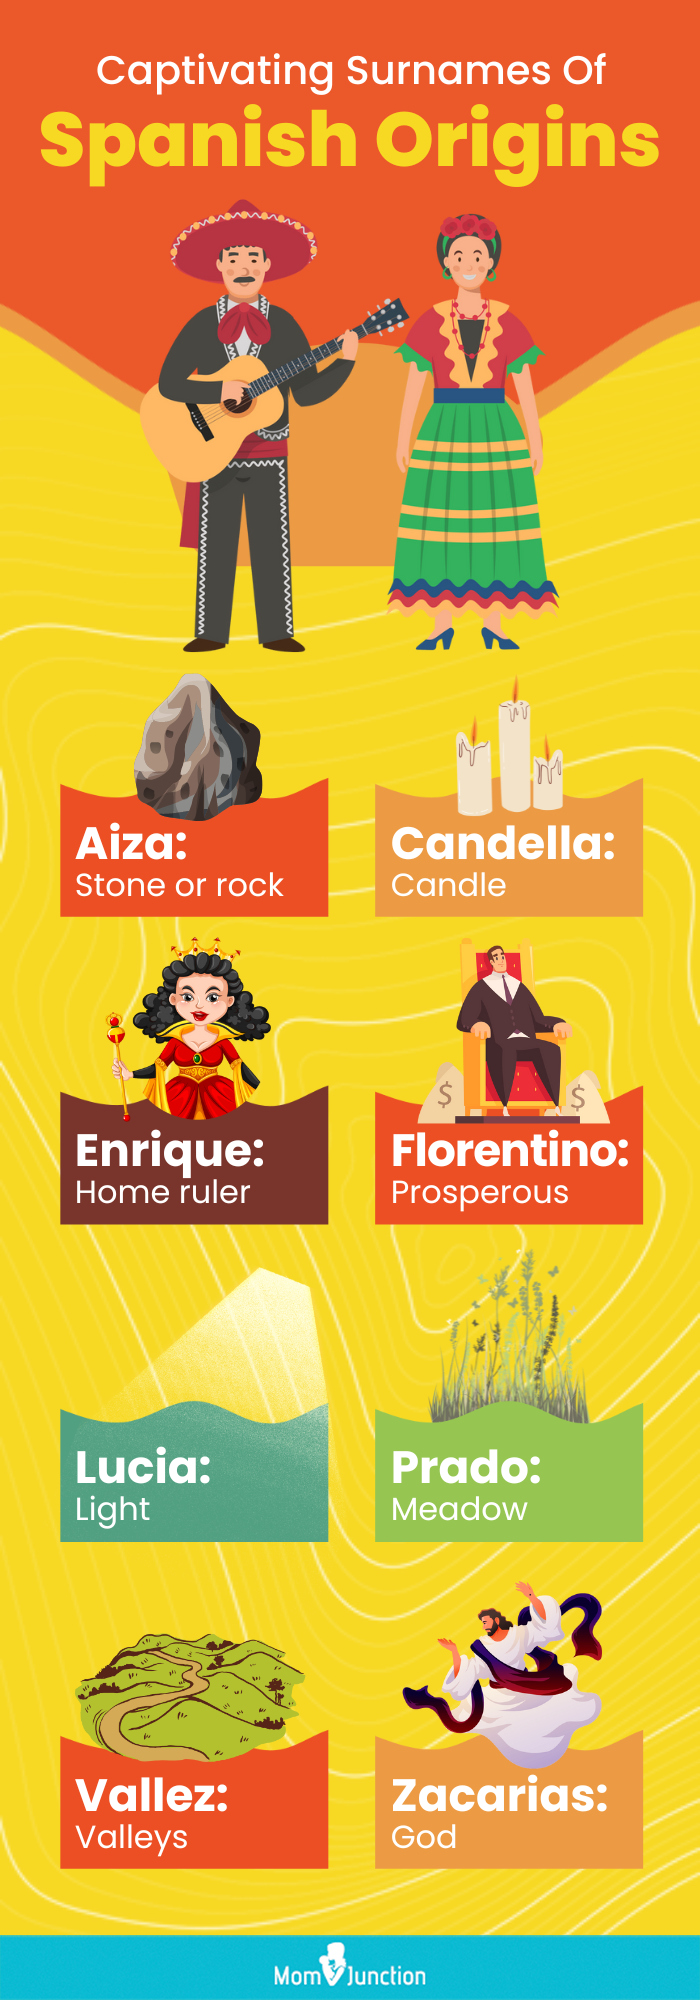 captivating surnames of spanish origins (infographic)